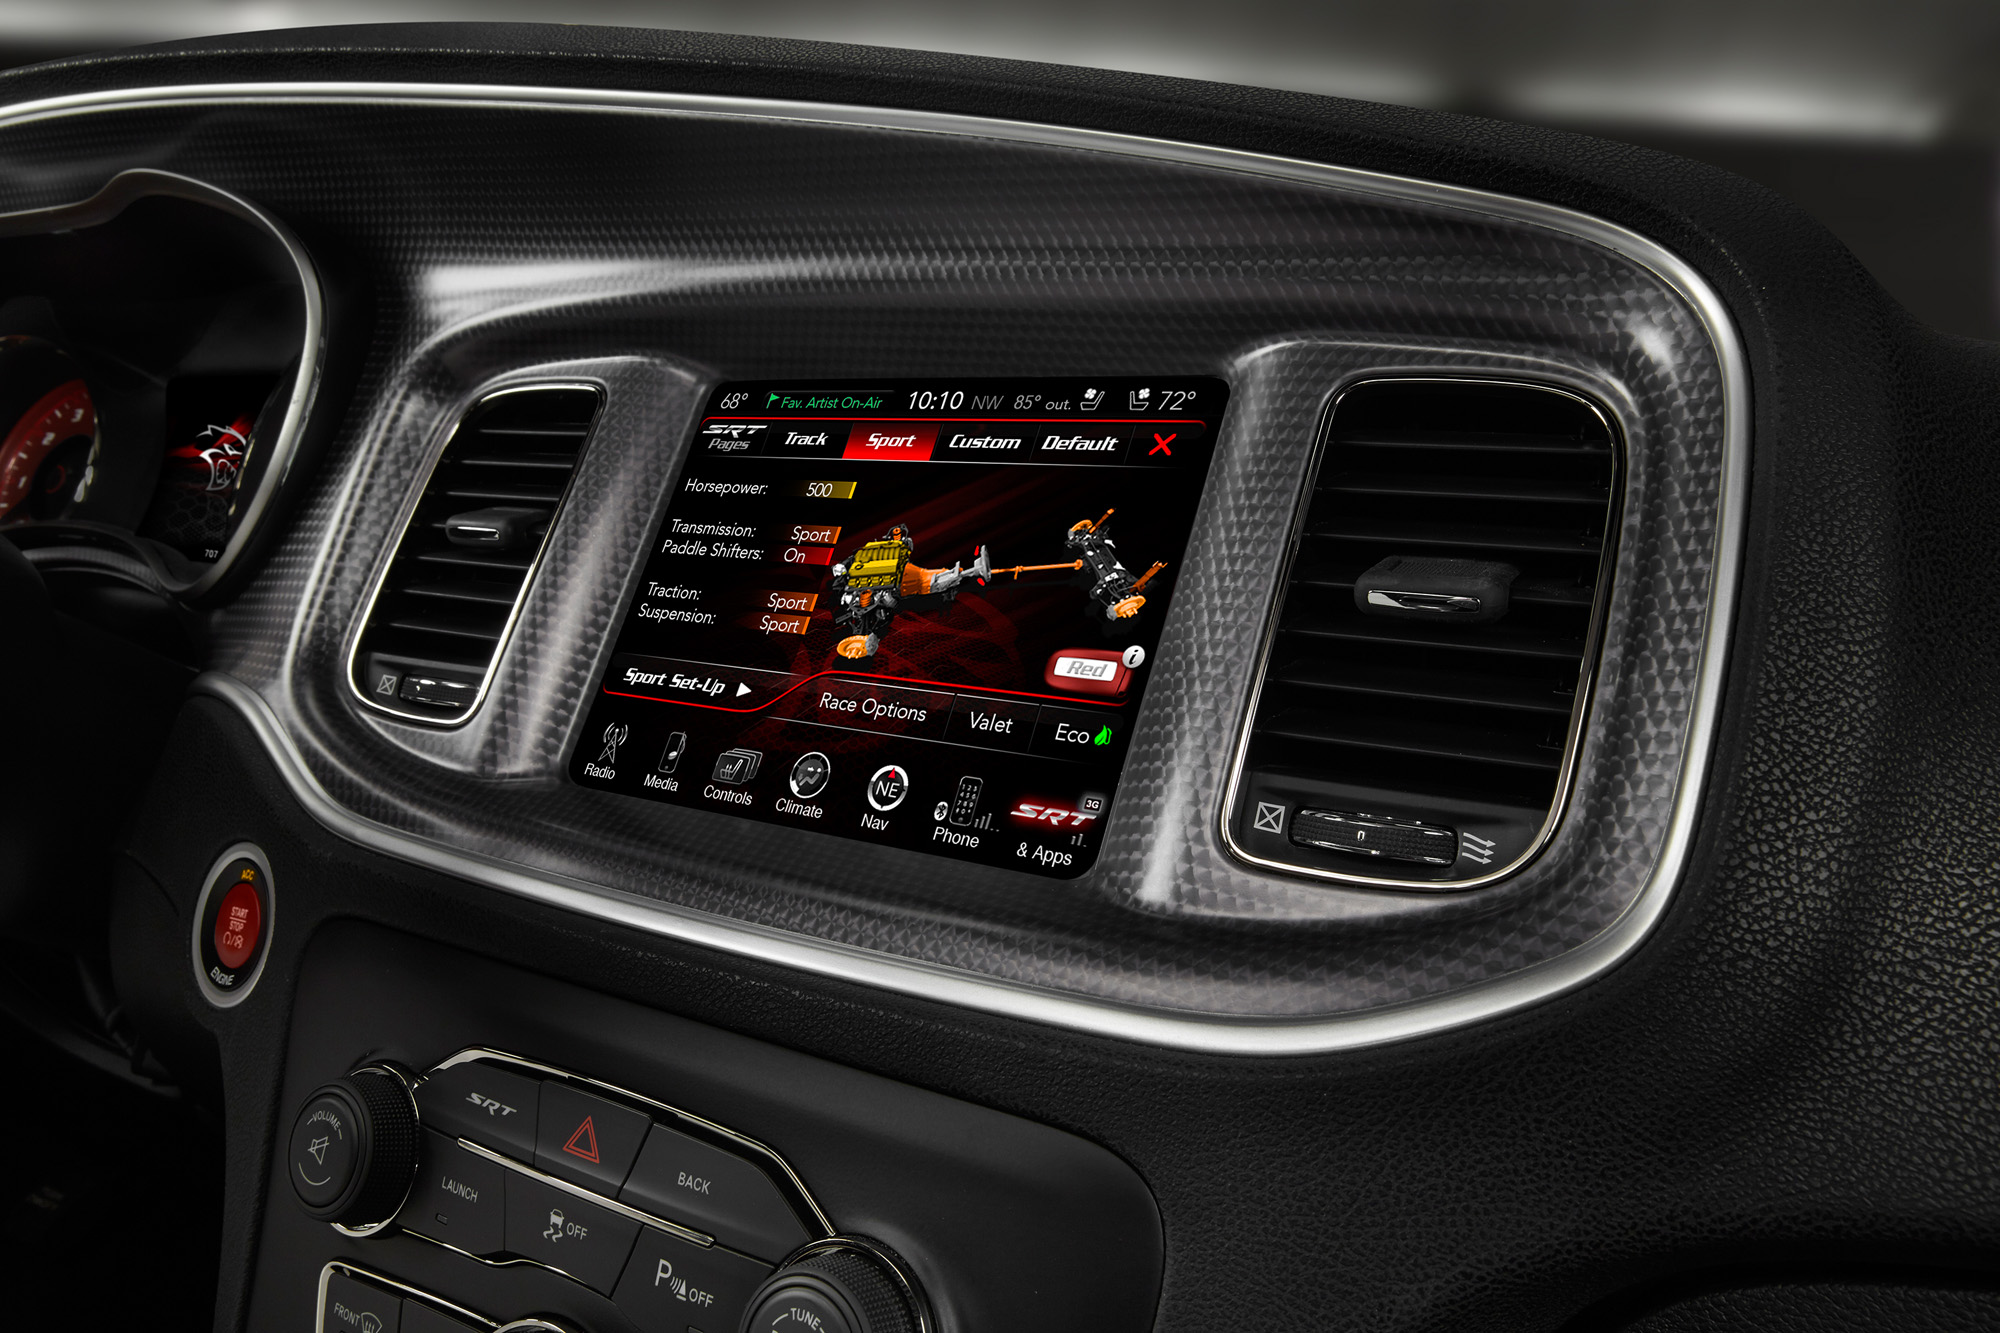 2015 Dodge Charger SRT - Sport mode setup screen